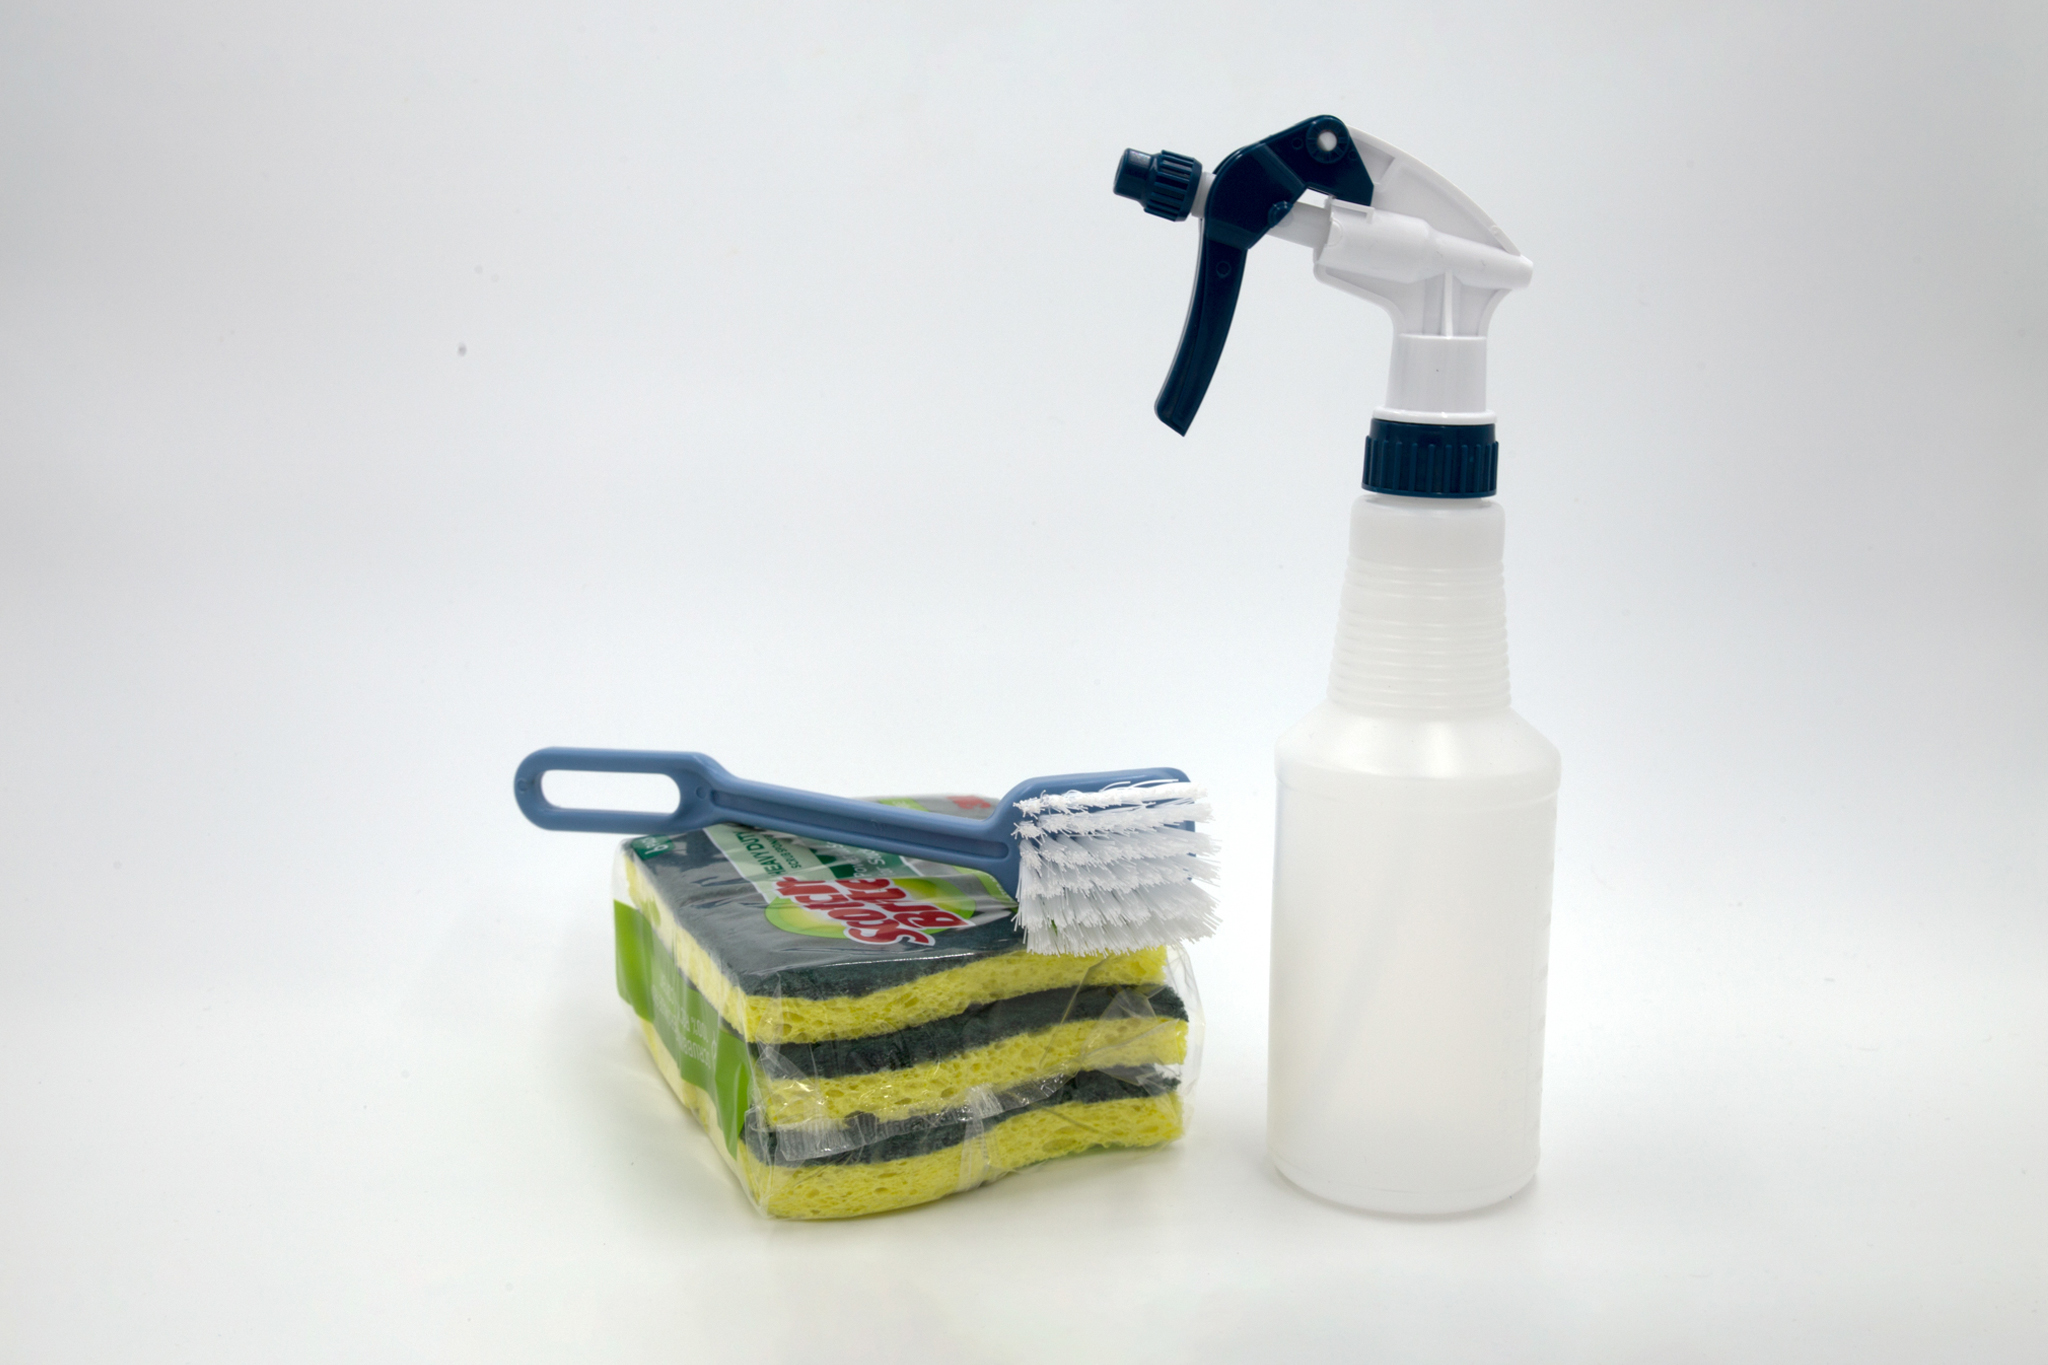 Sponge, spray bottle, and scrub brush